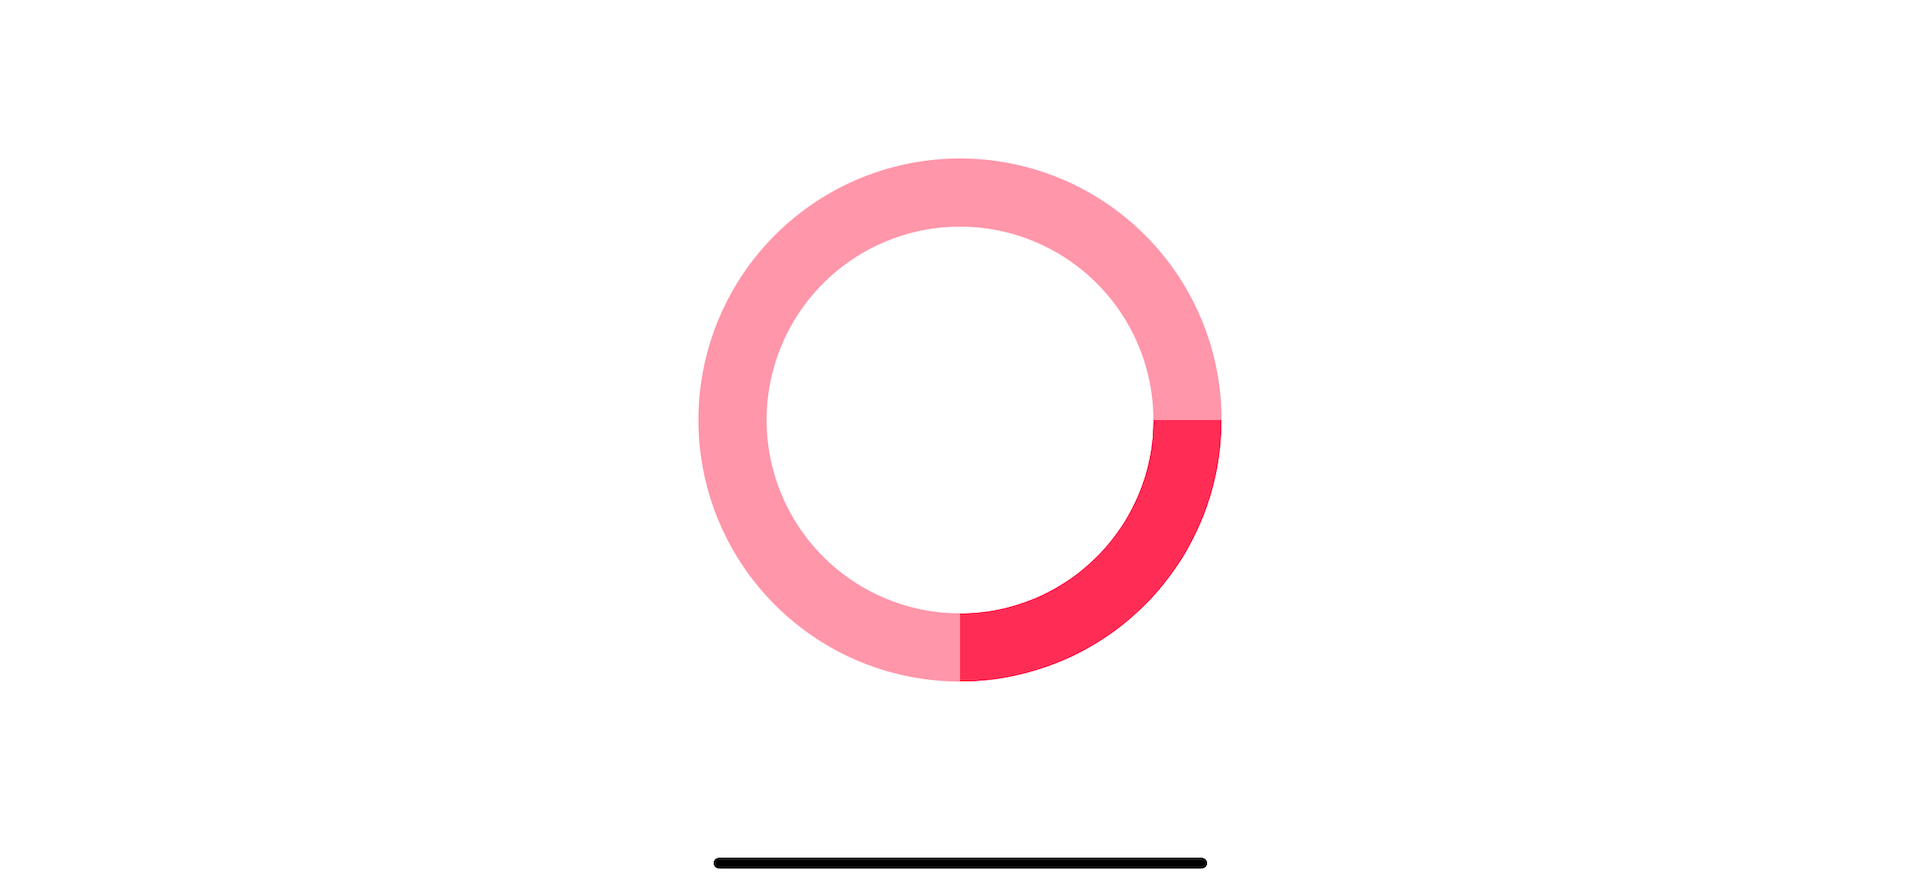 circular progress bar icon